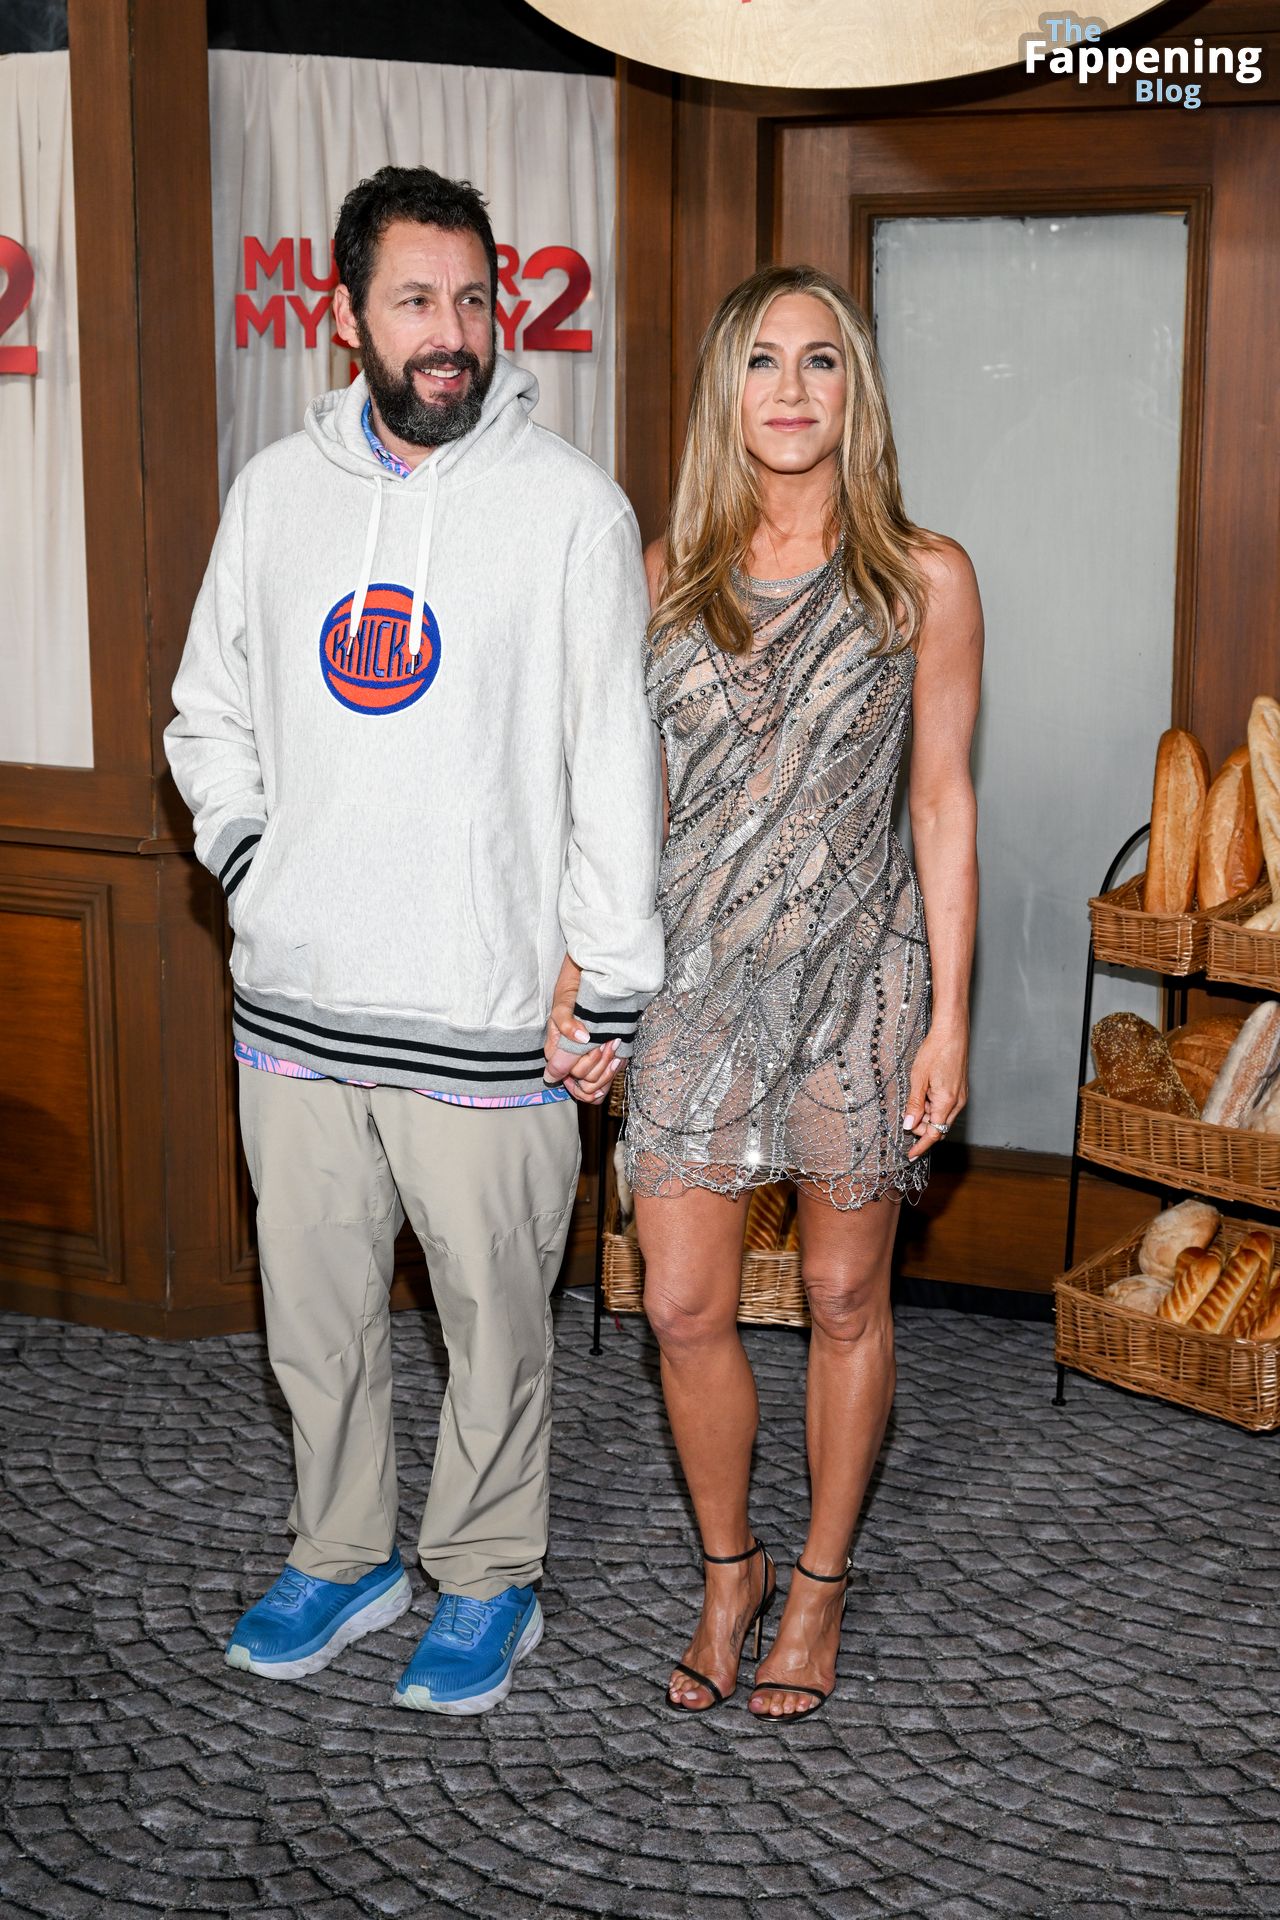 Jennifer Aniston Looks Sexy at the LA Premiere of Netflix’s “Murder Mystery 2” (150 Photos)